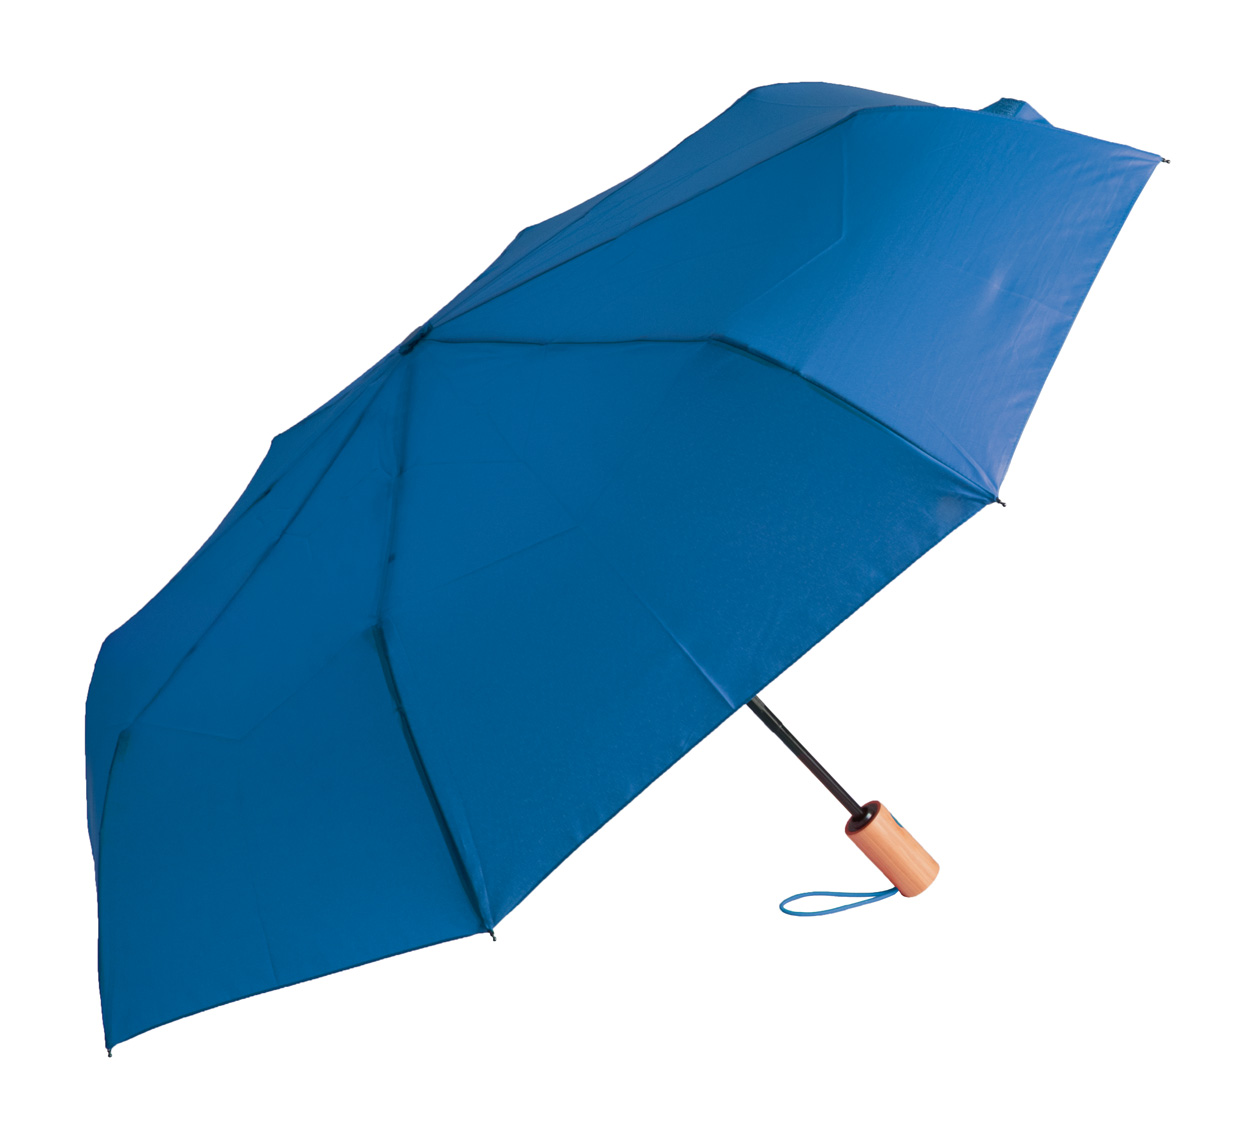 Kasaboo RPET deštník - modrá